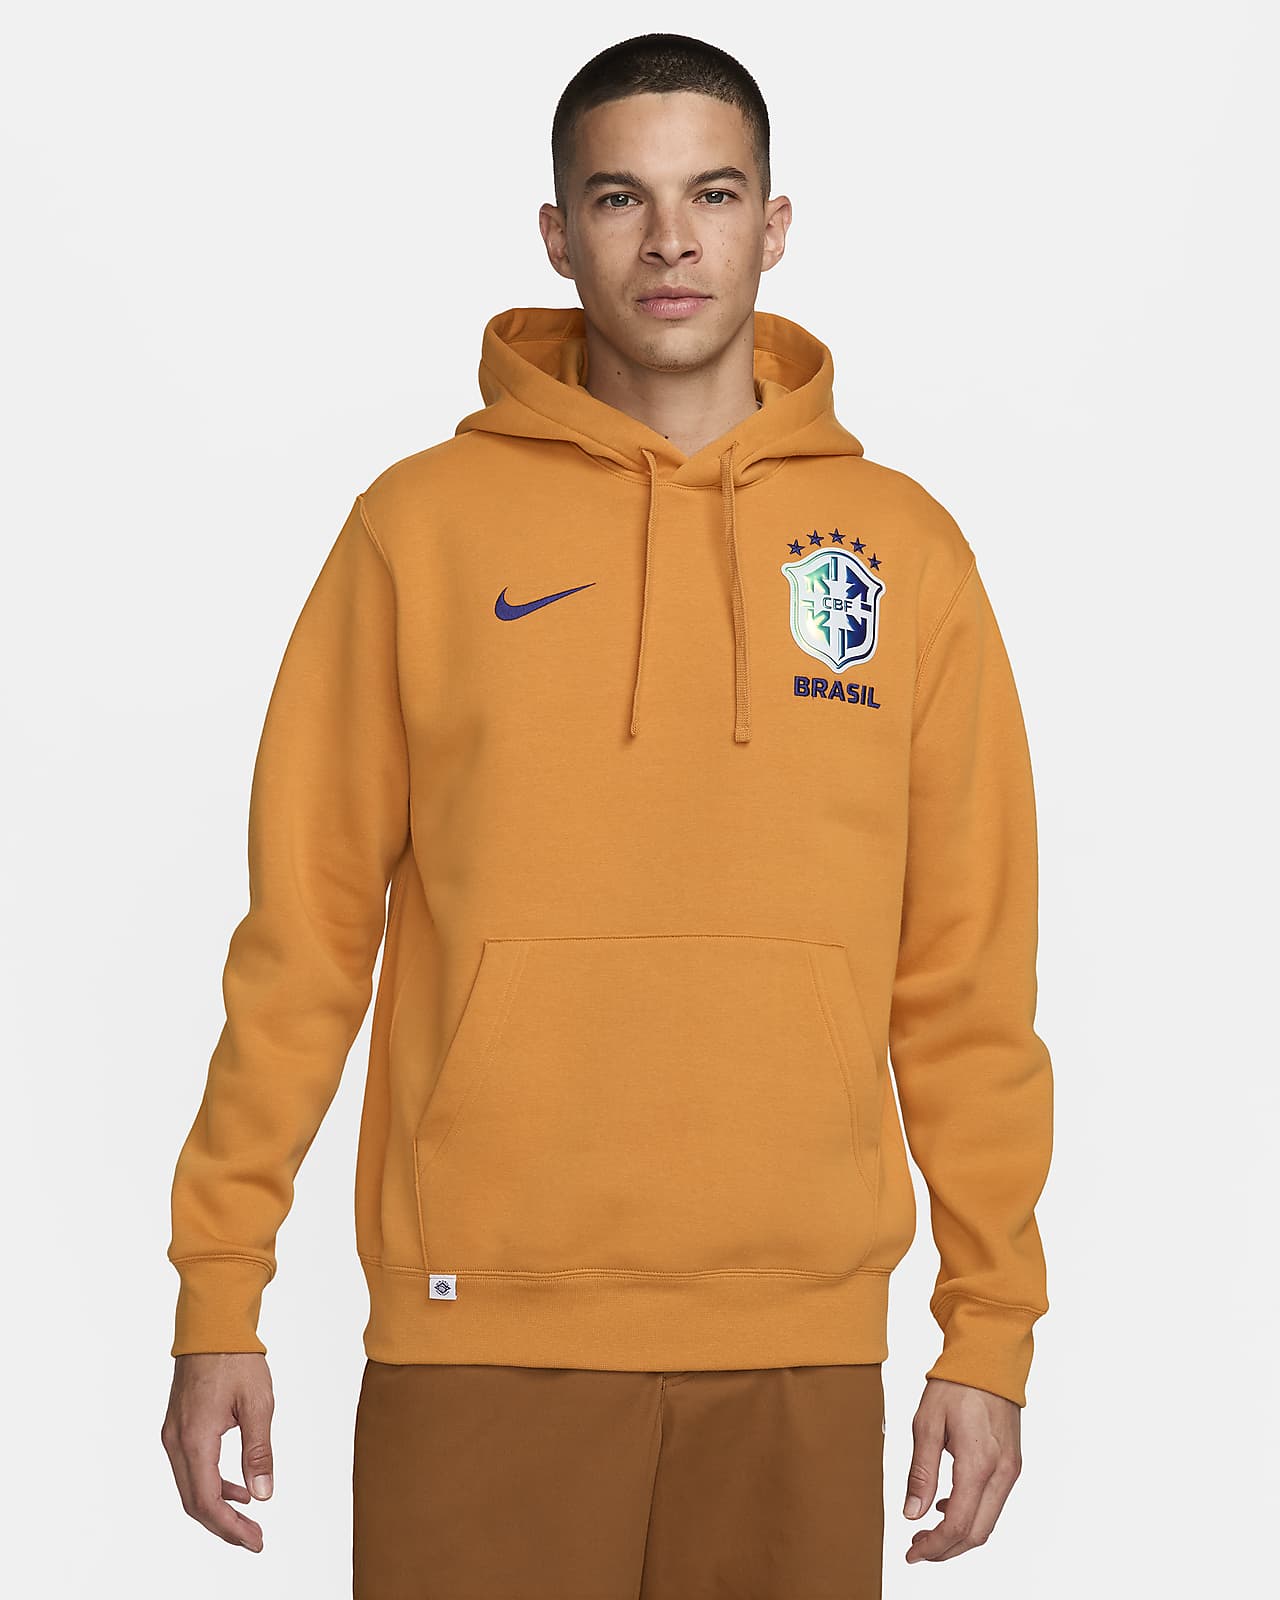 Brazil Club Men's Nike Soccer Pullover Hoodie